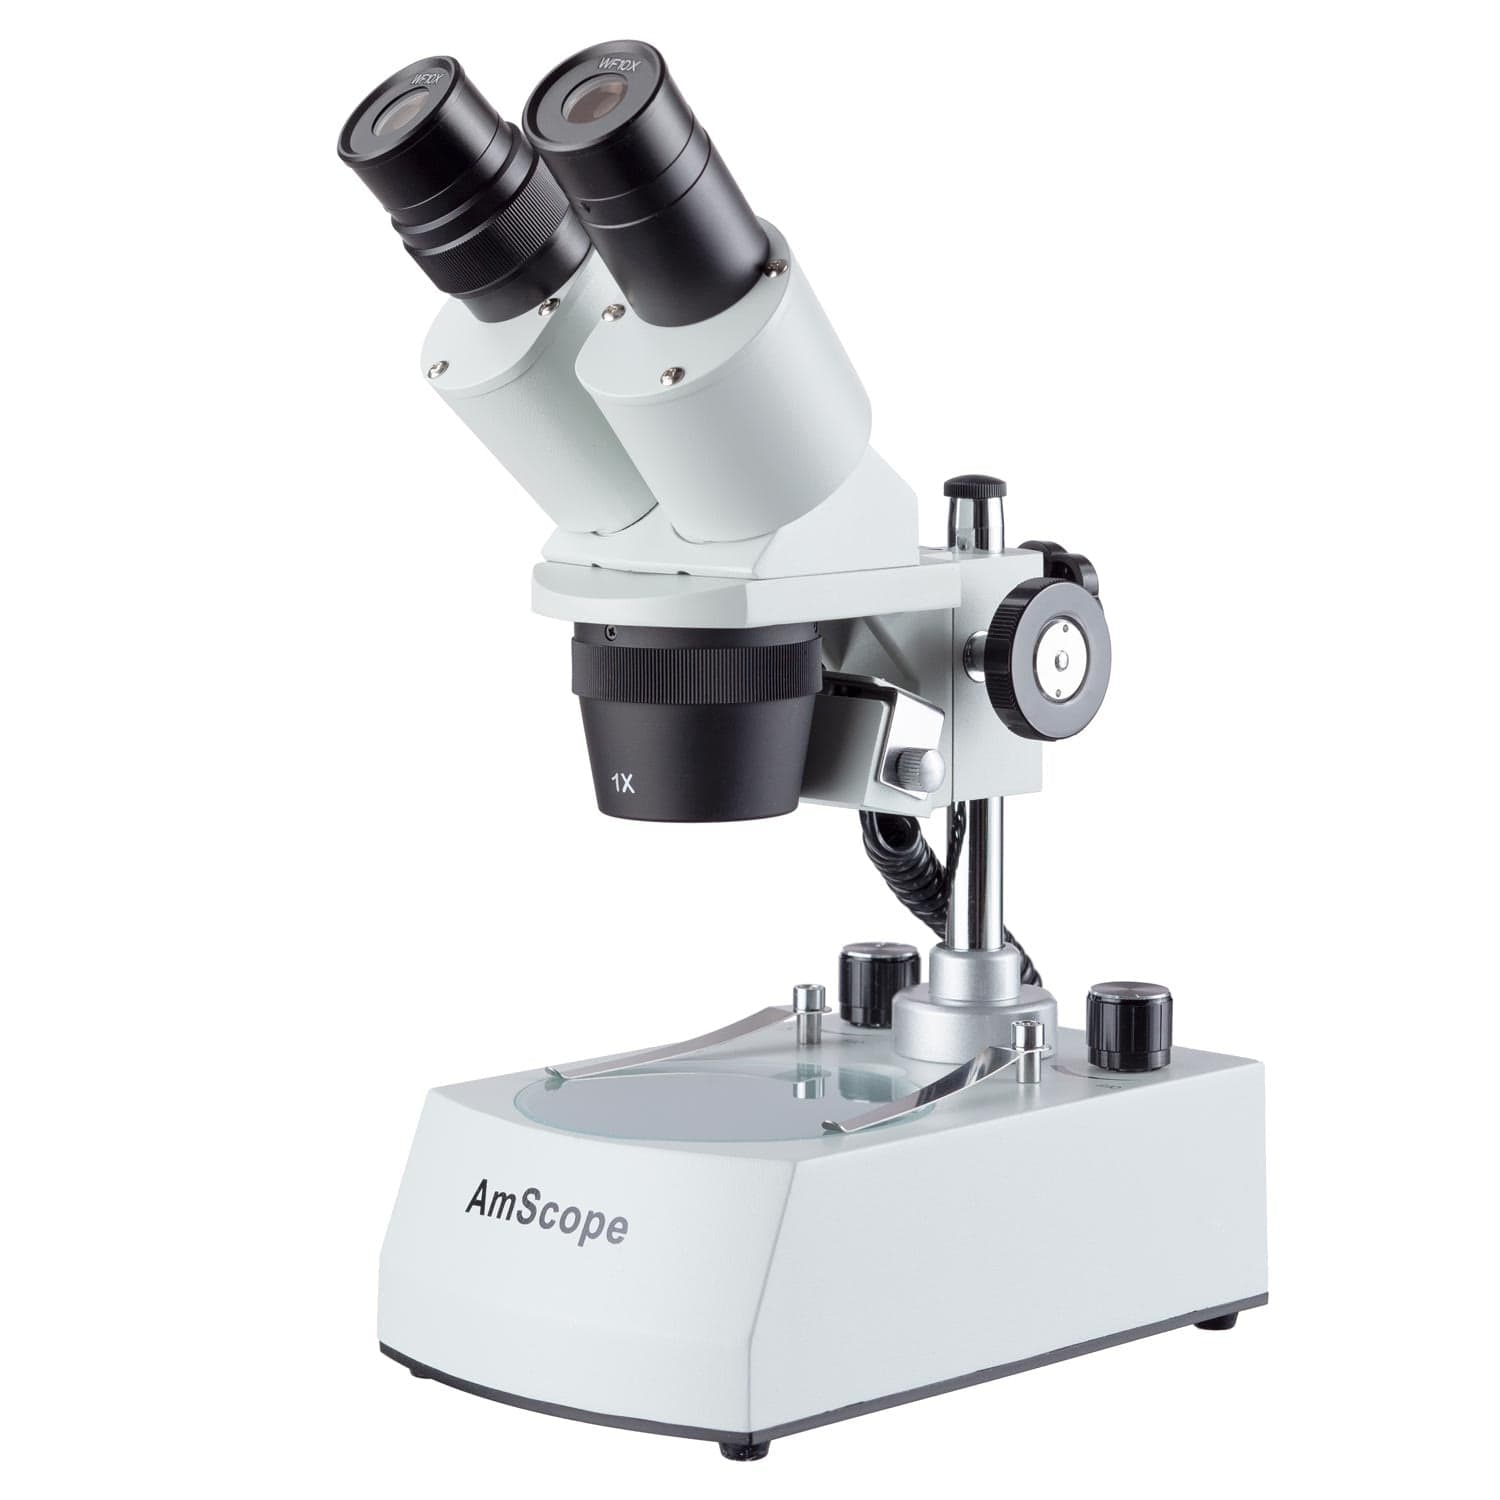 Pocket Microscope 30X with light